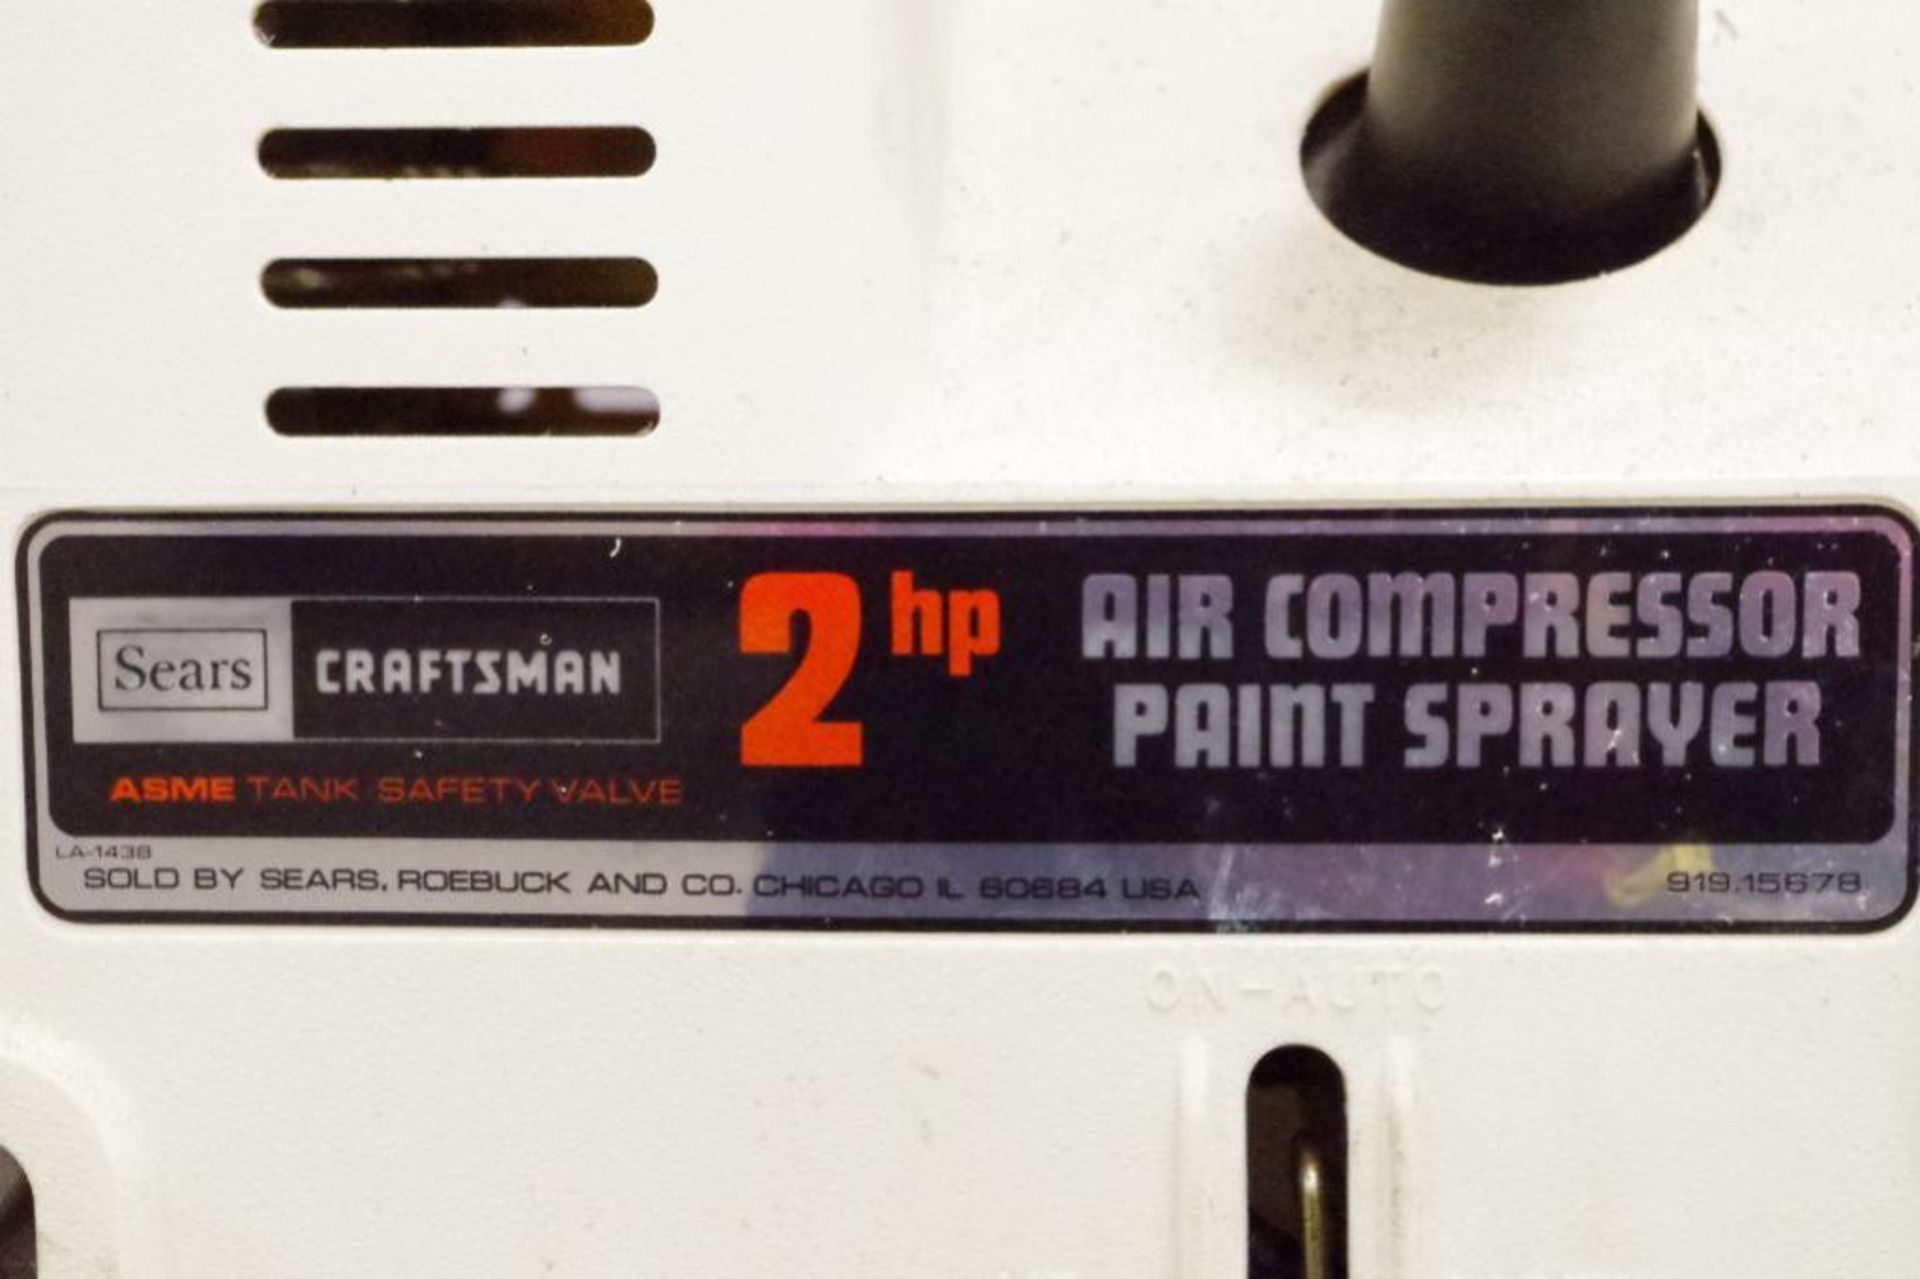 CRAFTSMAN 20 Gallon 2HP 125 PSI Air Compressor/Paint Sprayer M/N 919.15678 - Image 6 of 6